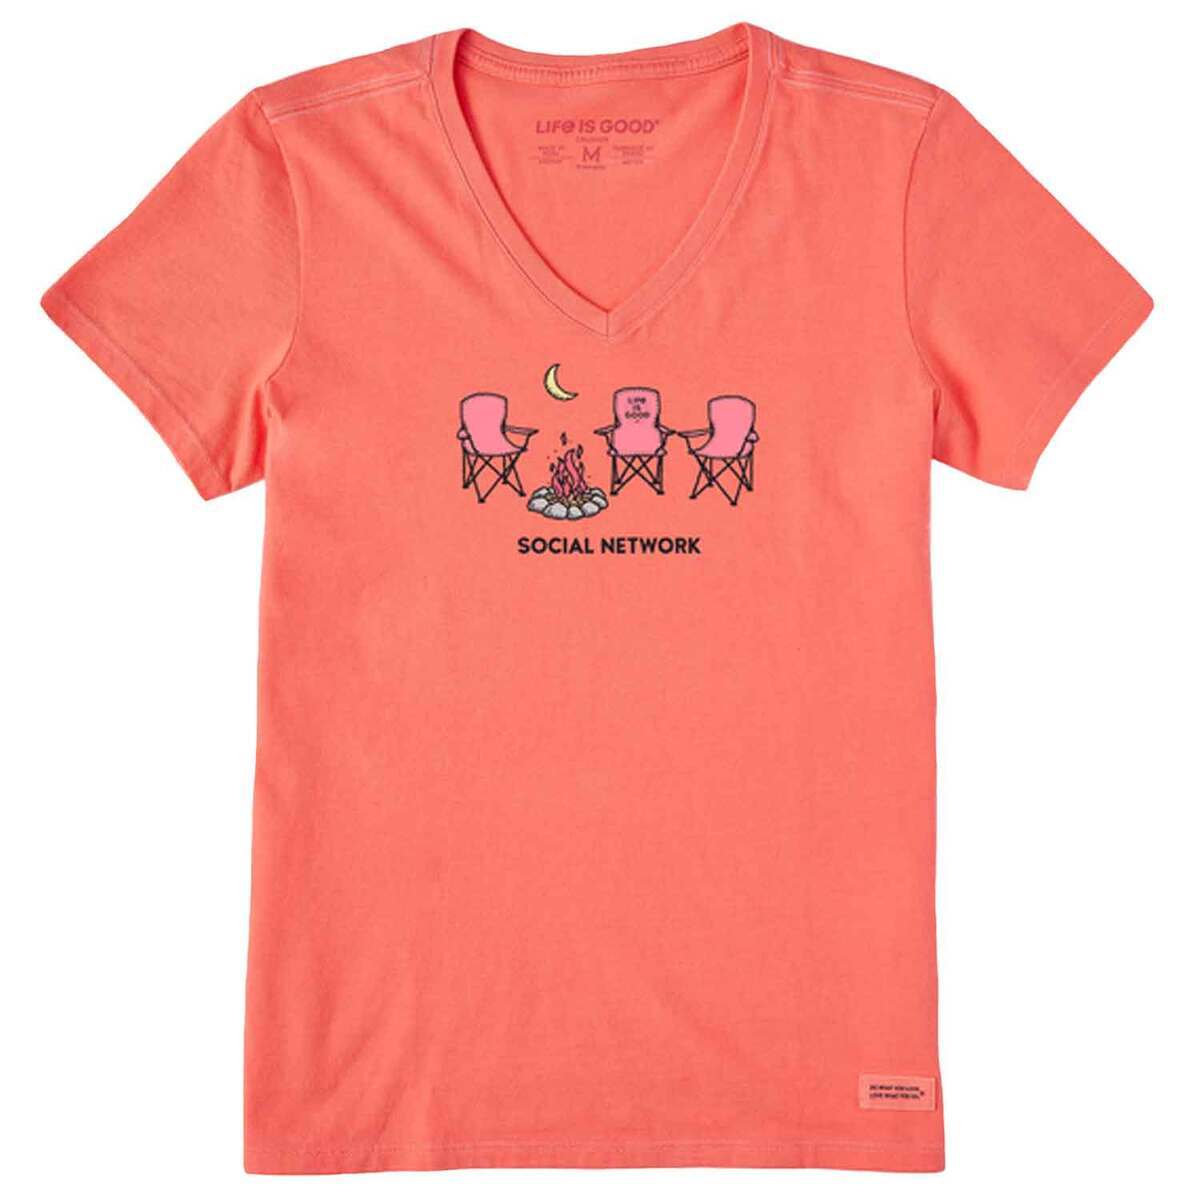 ORVIS Endless Sunrise Women's Fishing T-shirt